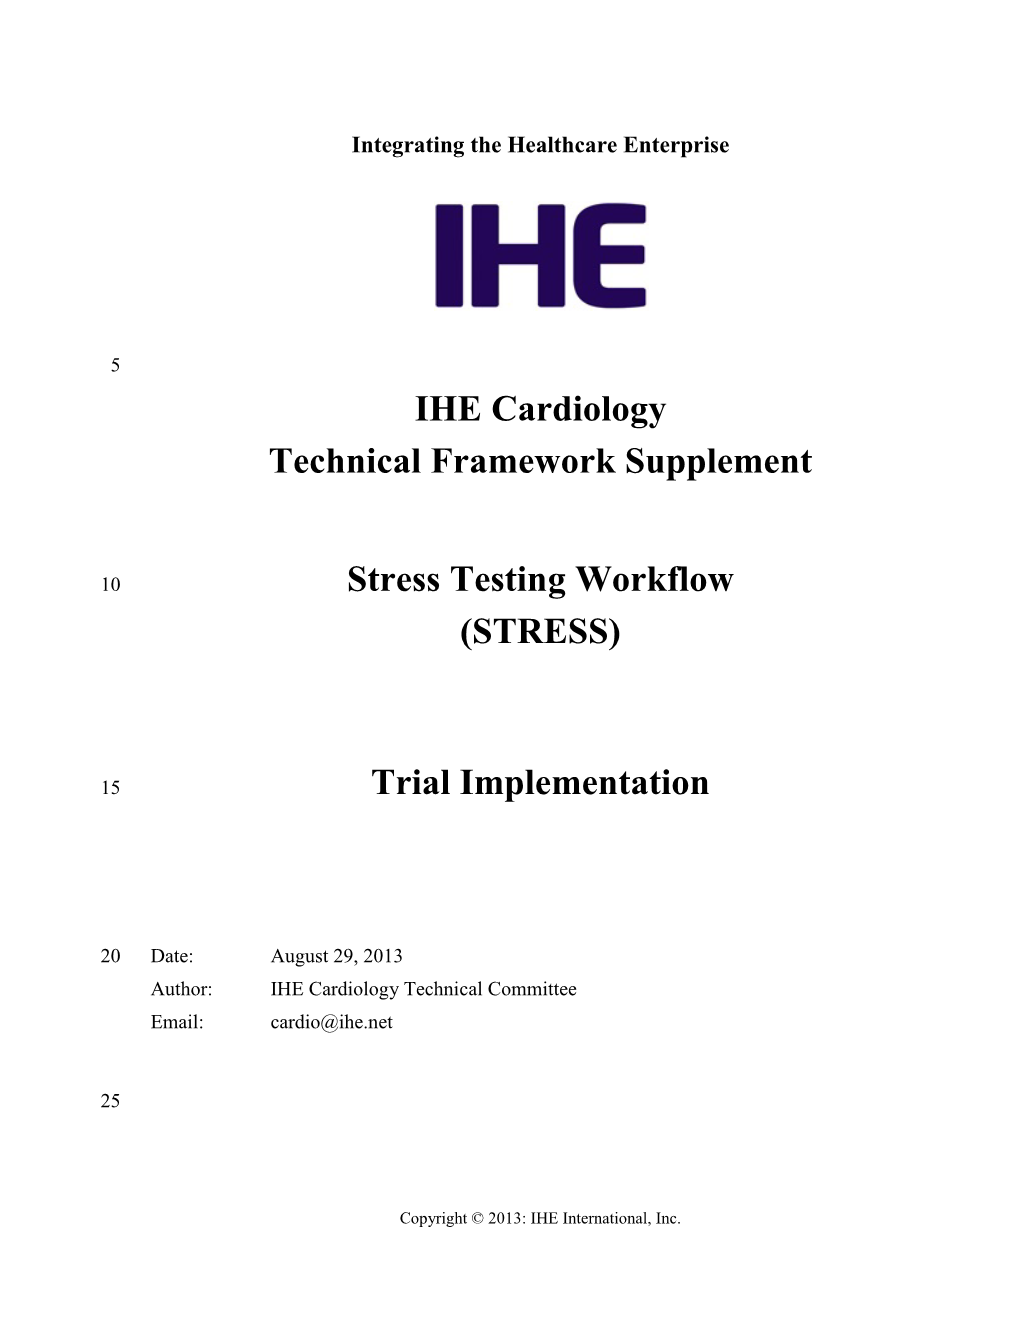 IHE Cardiology Technical Framework Supplement Stress Testing Workflow